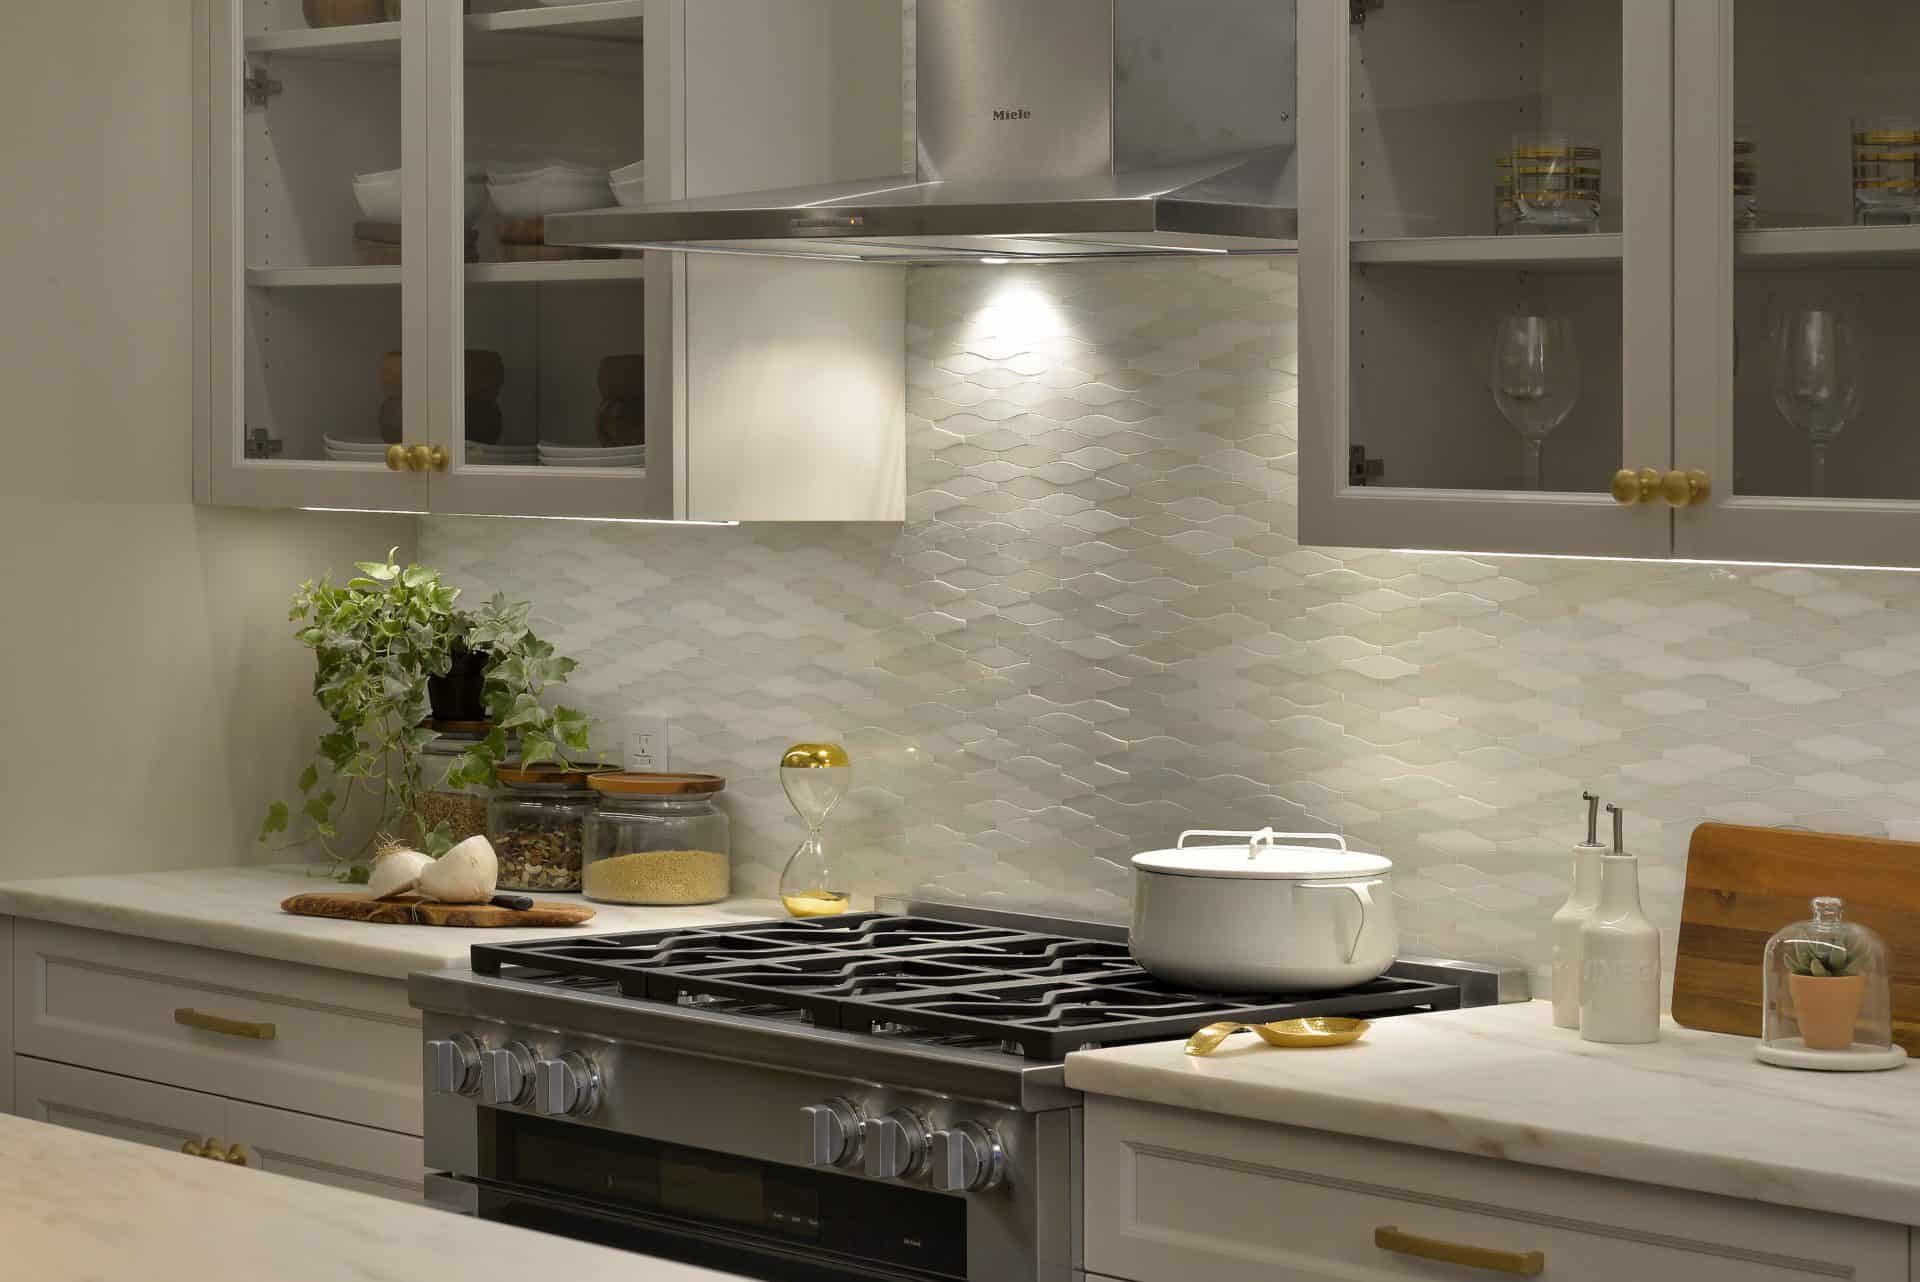 SoNo loft kitchen features Bilotta cabinets in Balboa Mist and Jazz Glass mosaic backsplash.